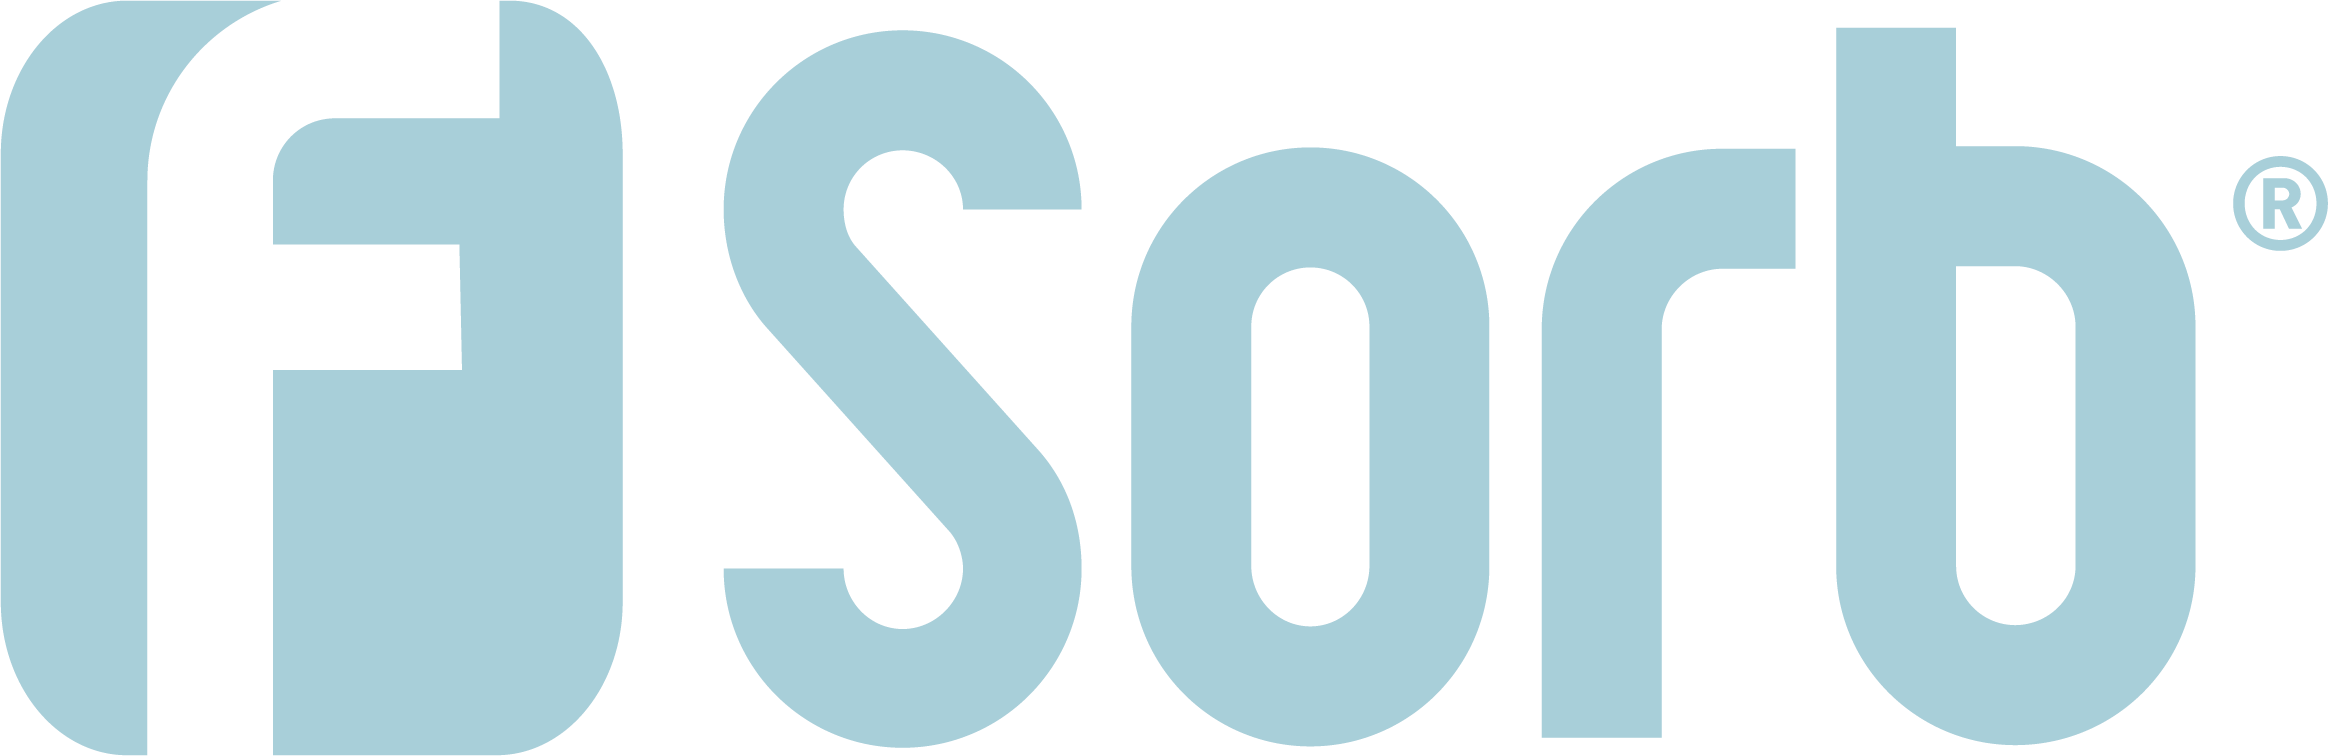 FSorb Logo.png